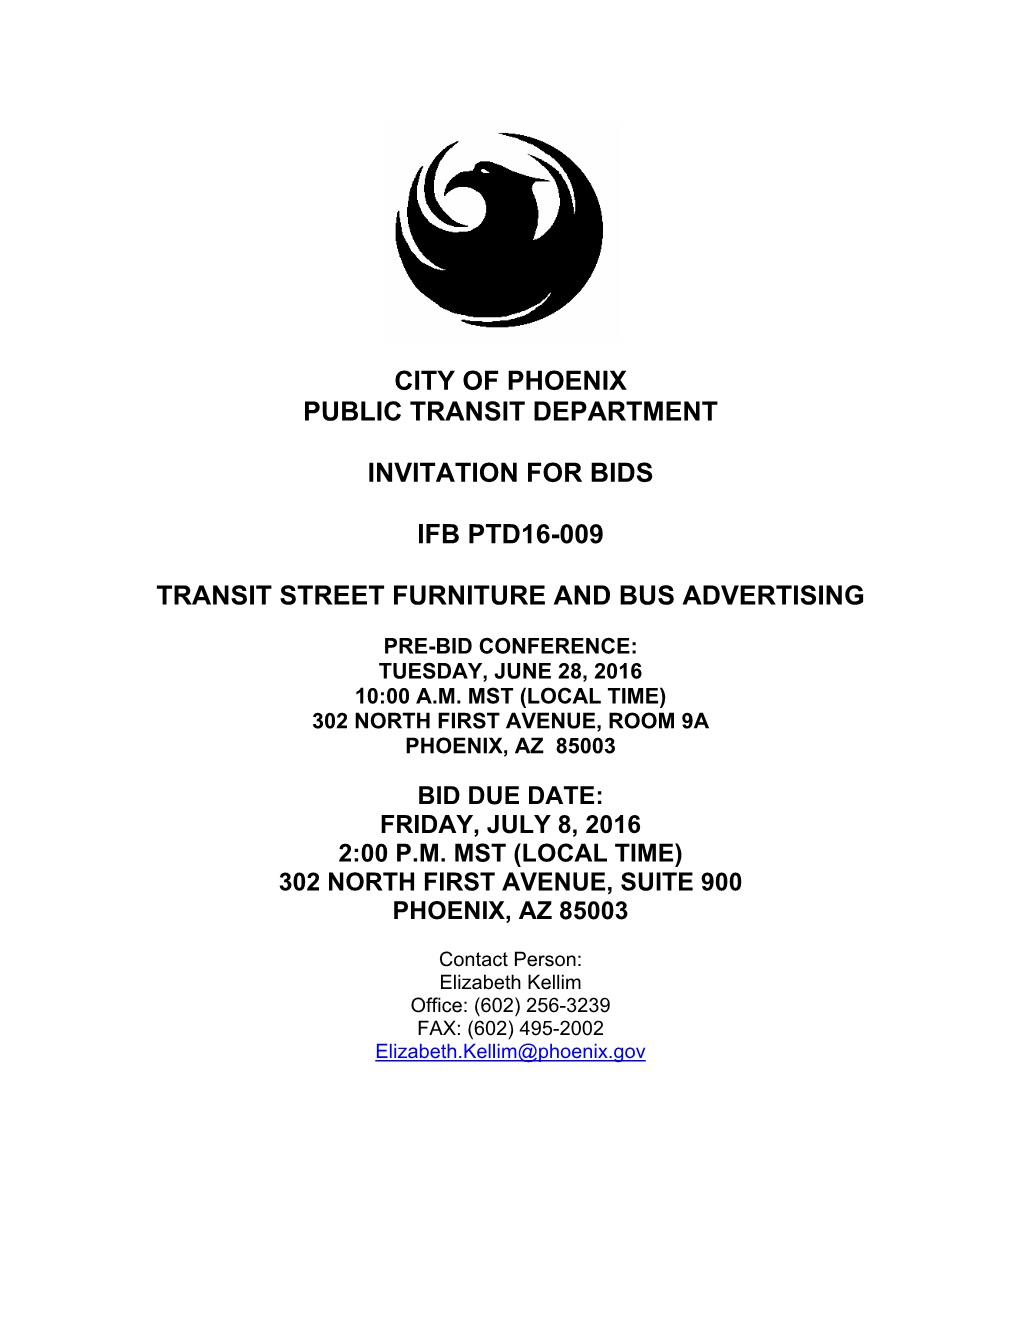 City of Phoenix Public Transit Department Invitation for Bids Ifb